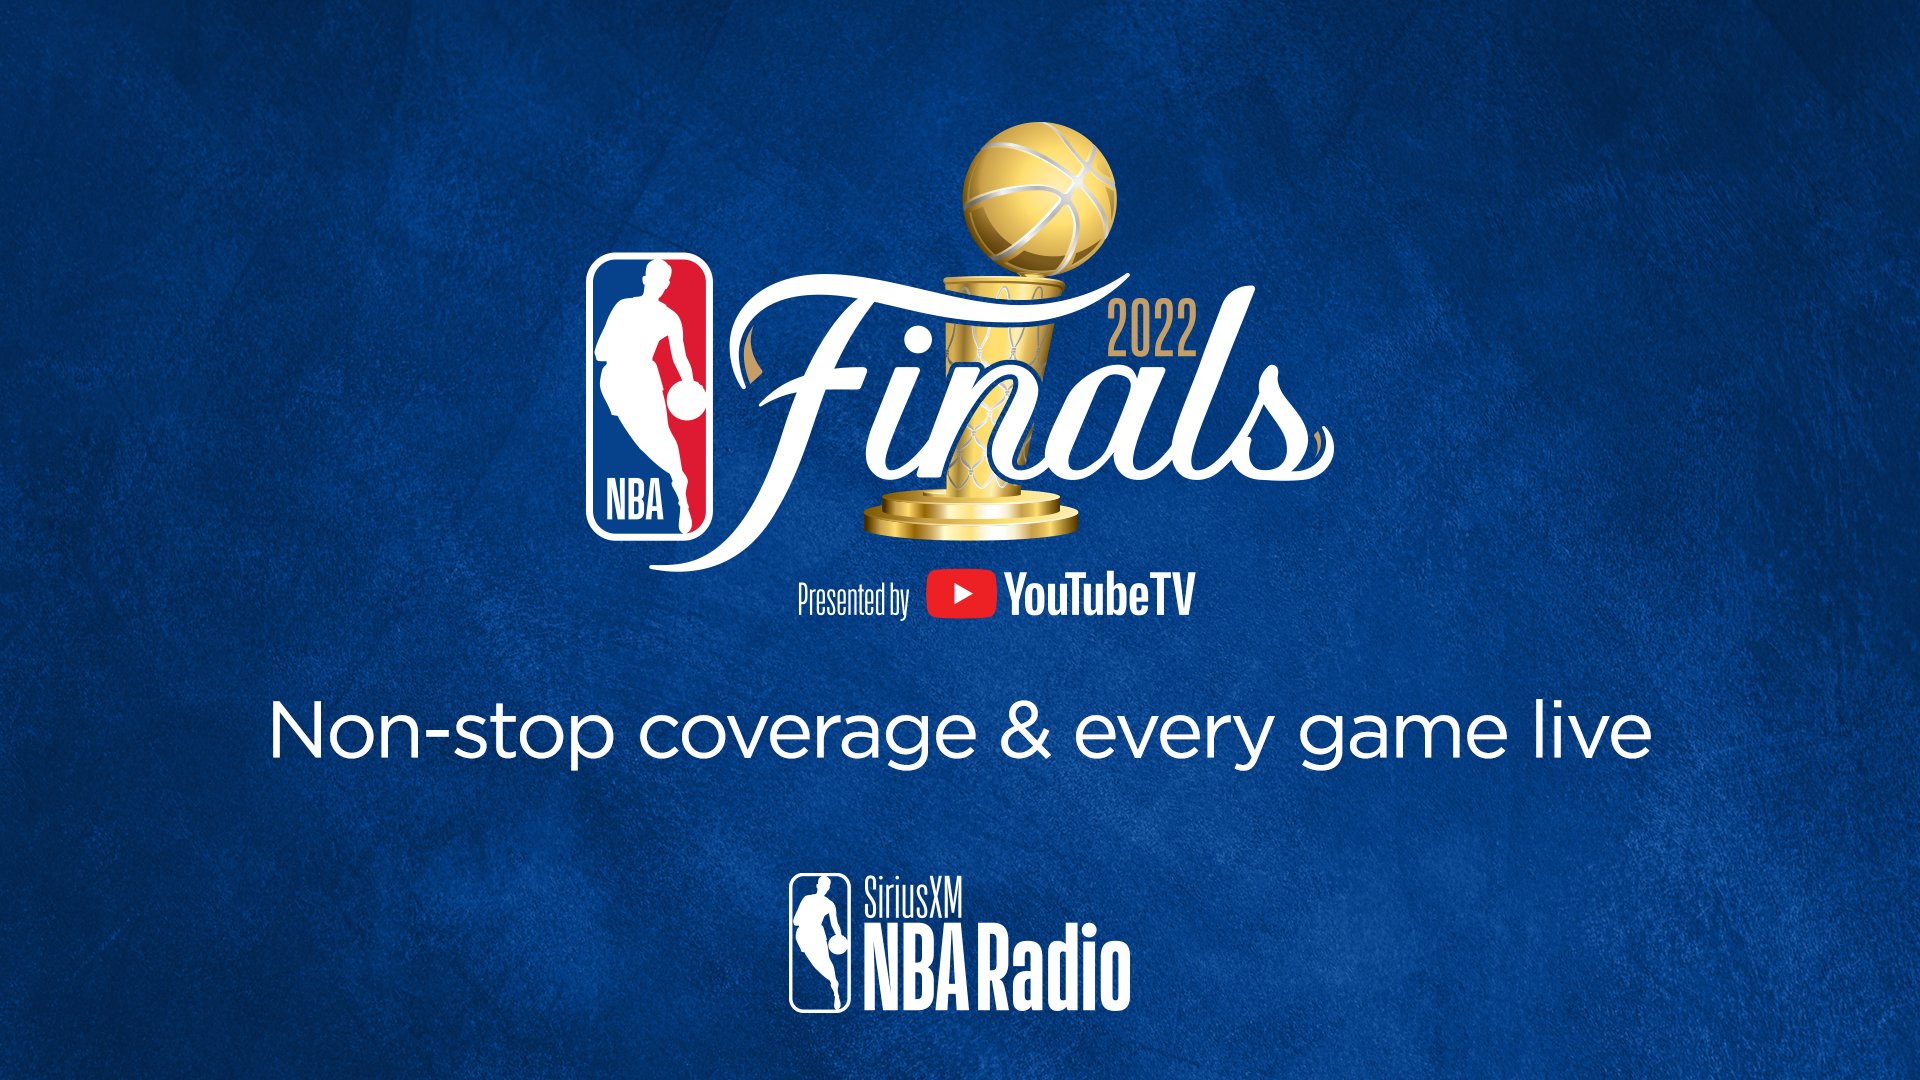 NBA Finals on SiriusXM